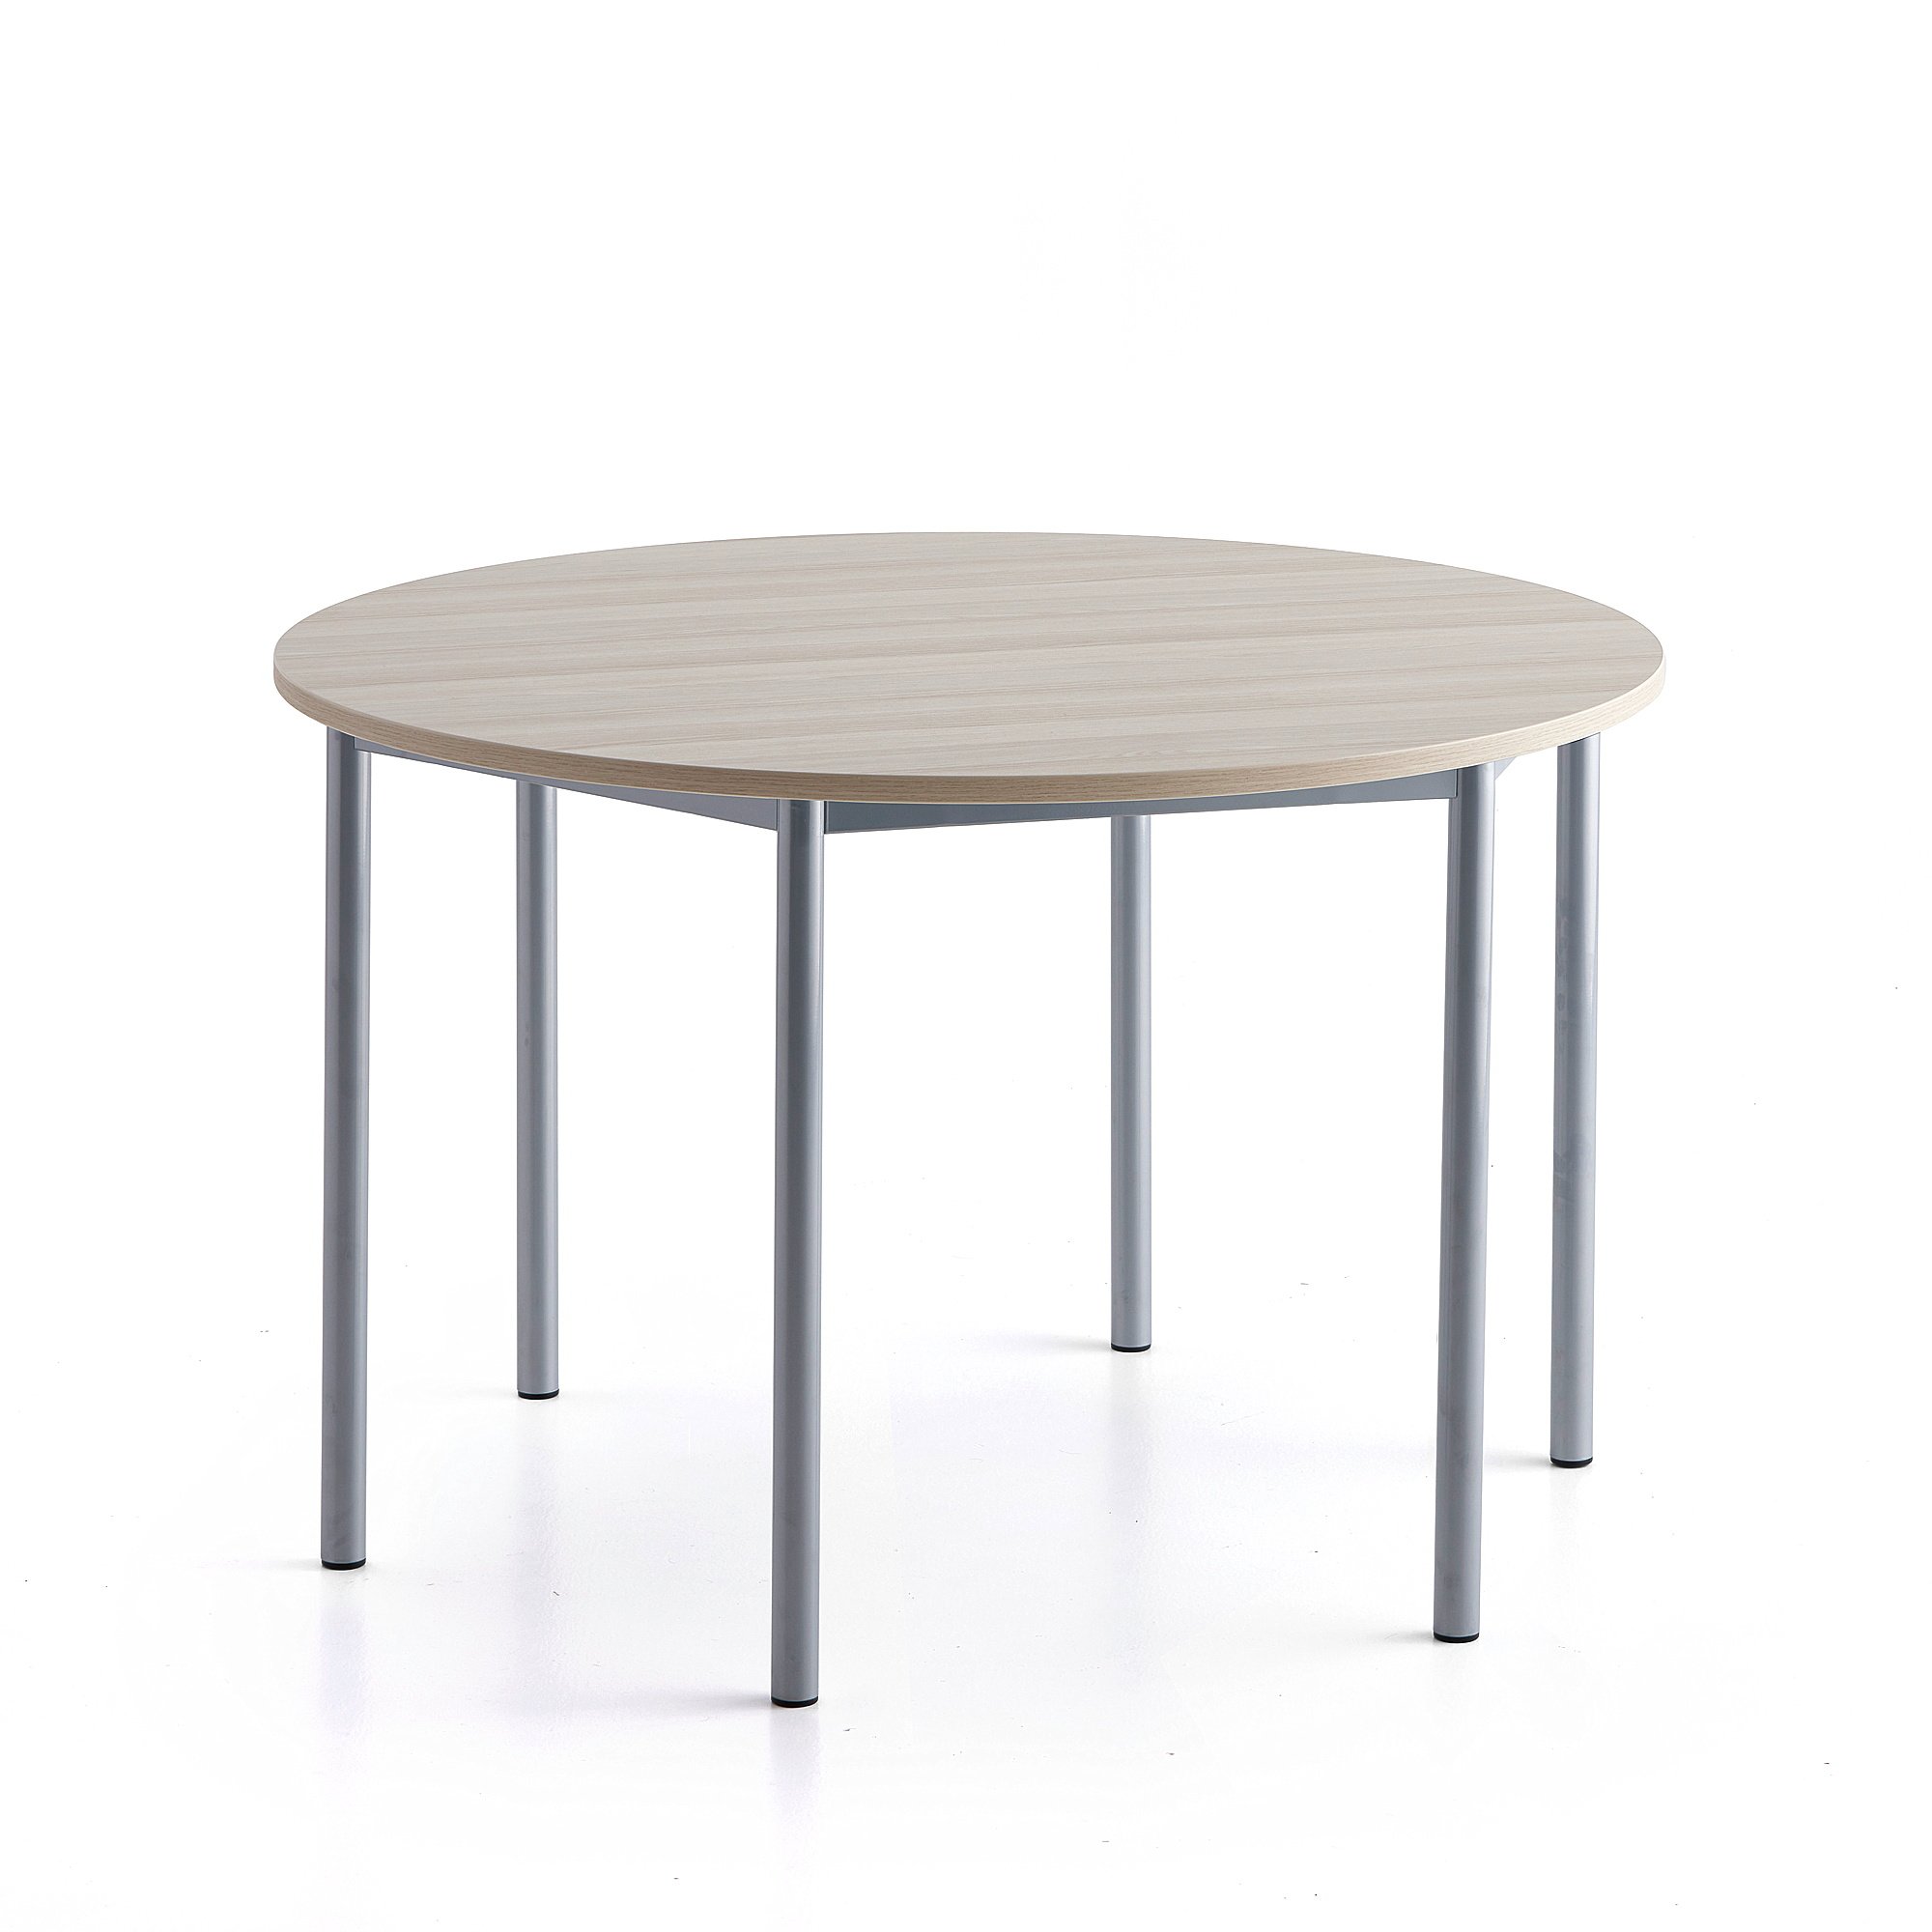 Stůl BORÅS PLUS, Ø1200x760 mm, stříbrné nohy, HPL deska, jasan